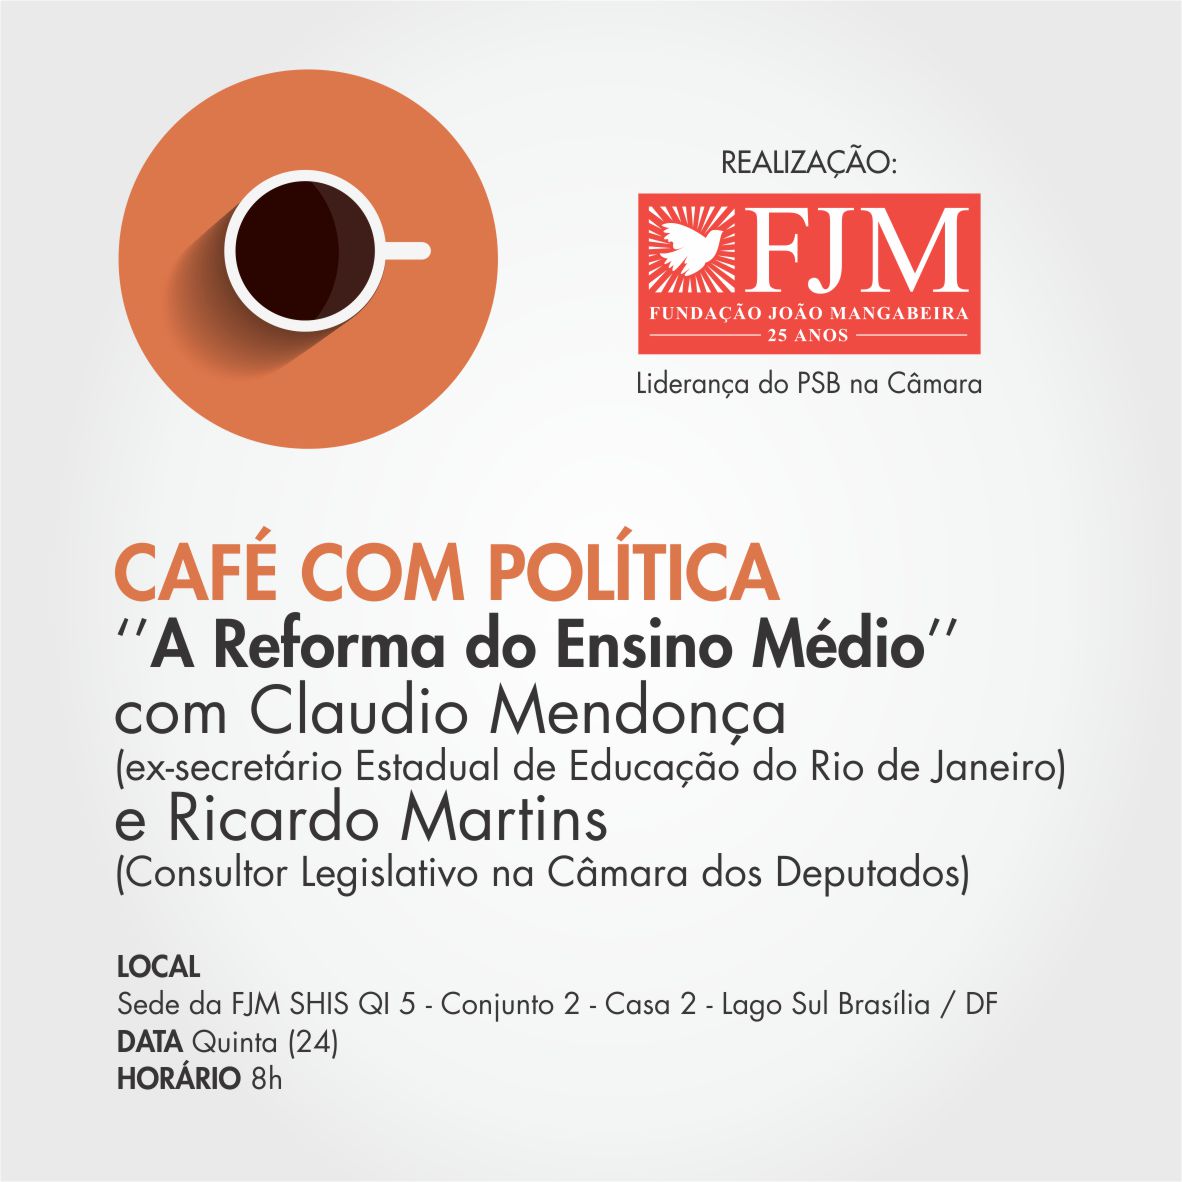 fjm_cafecompolitica_convite_900x900px